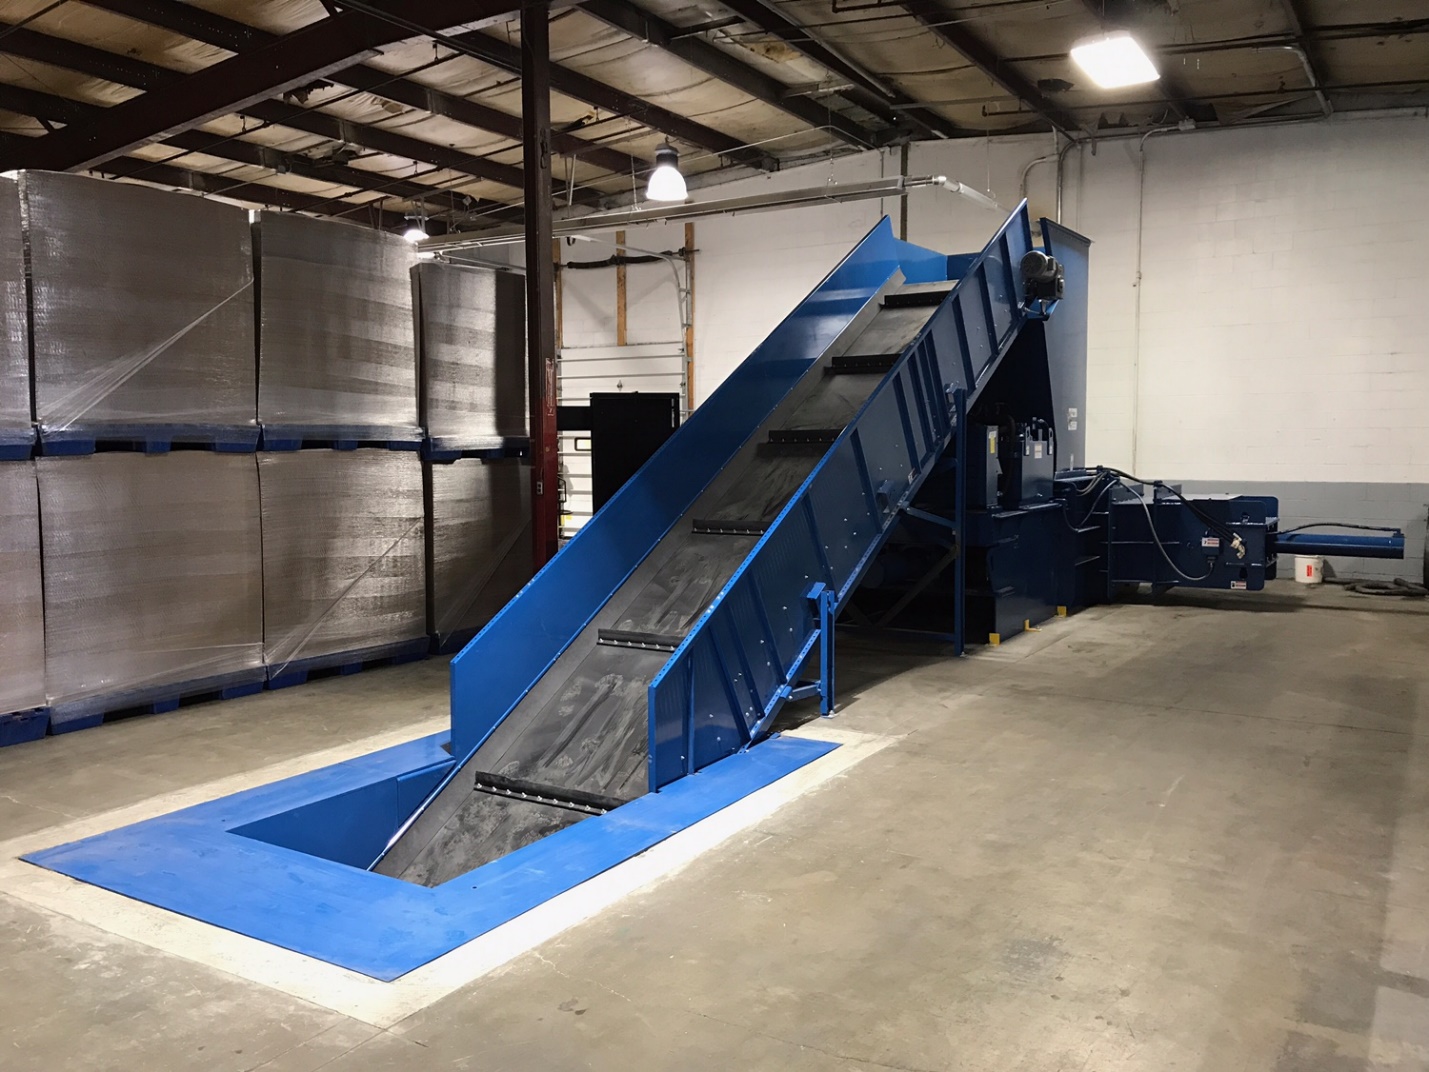 A blue conveyor belt in an industrial setting.